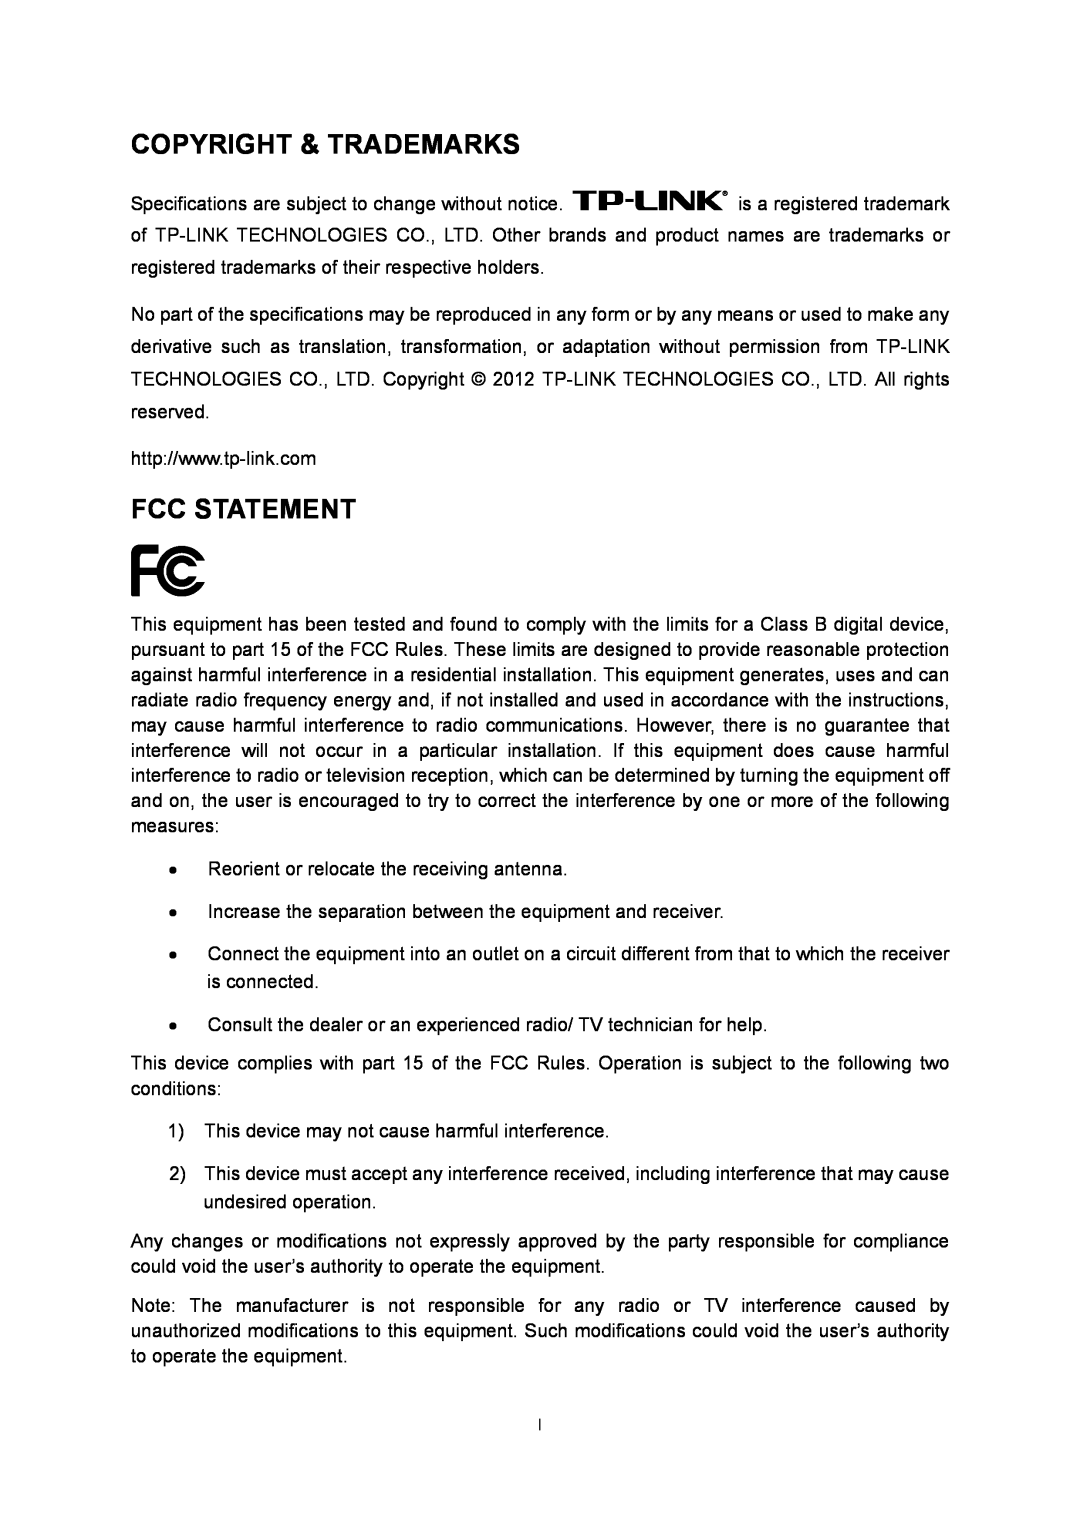 TP-Link TL-WR940N manual Copyright & Trademarks, Fcc Statement 